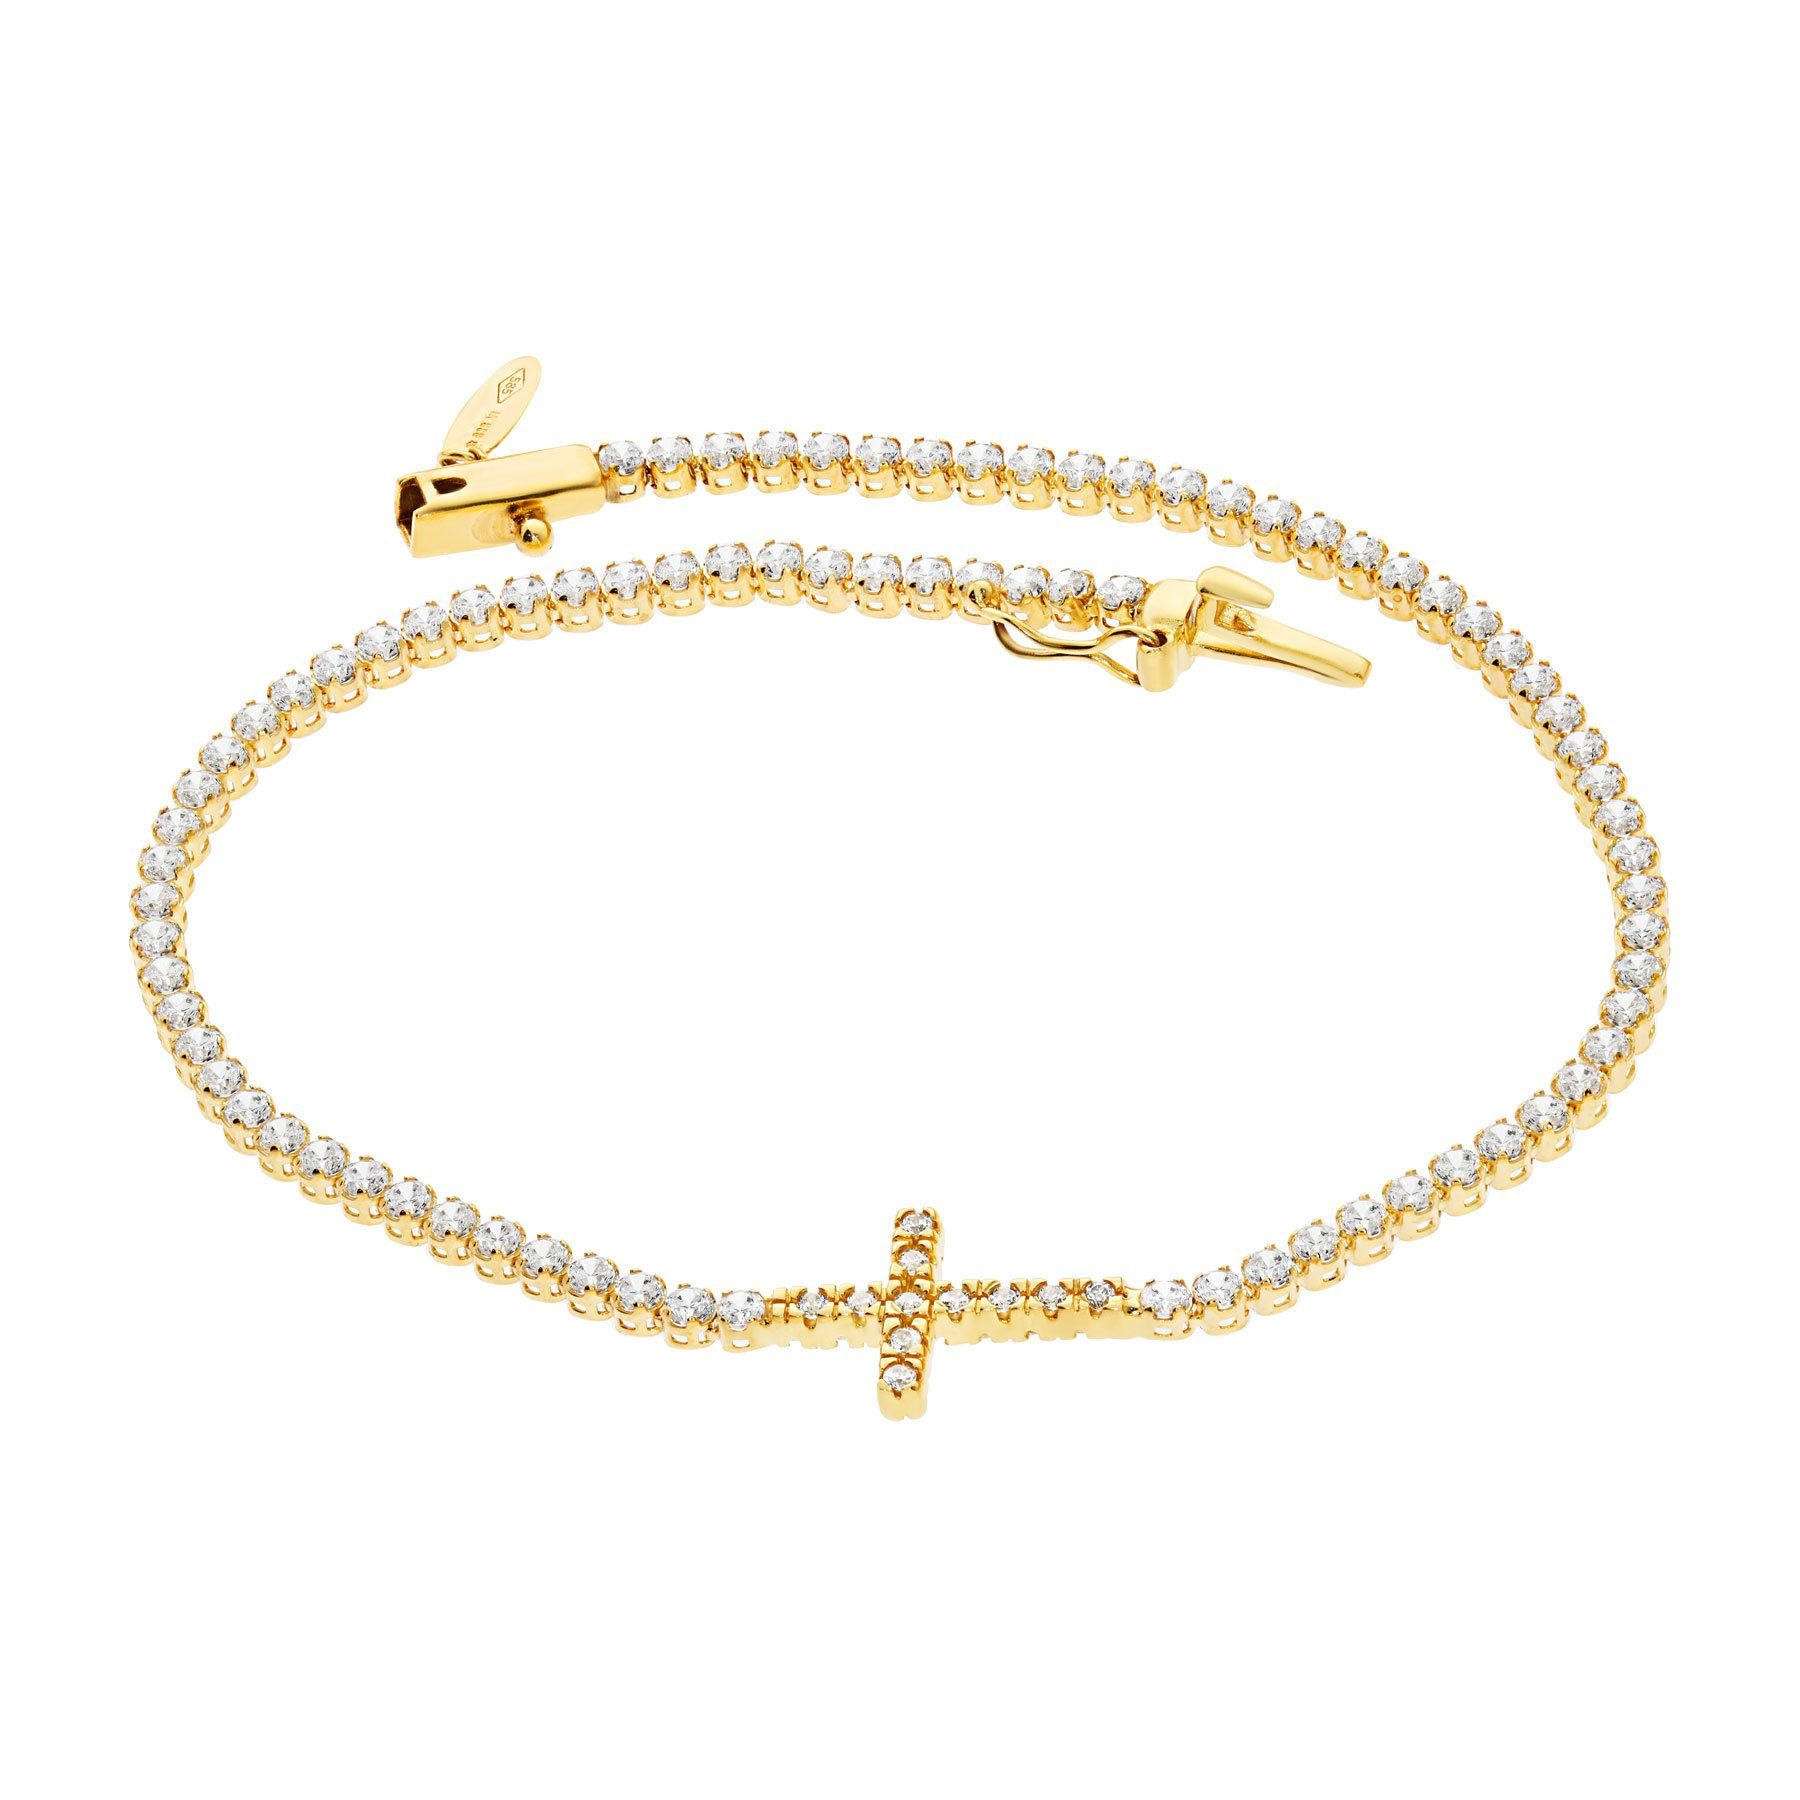 Damen Schmuck Stella-Jewellery Goldarmband 585er Gelbgold Armband mit Kreuz und Zirkonia (inkl. Etui), Armkette Goldarmband Kreu